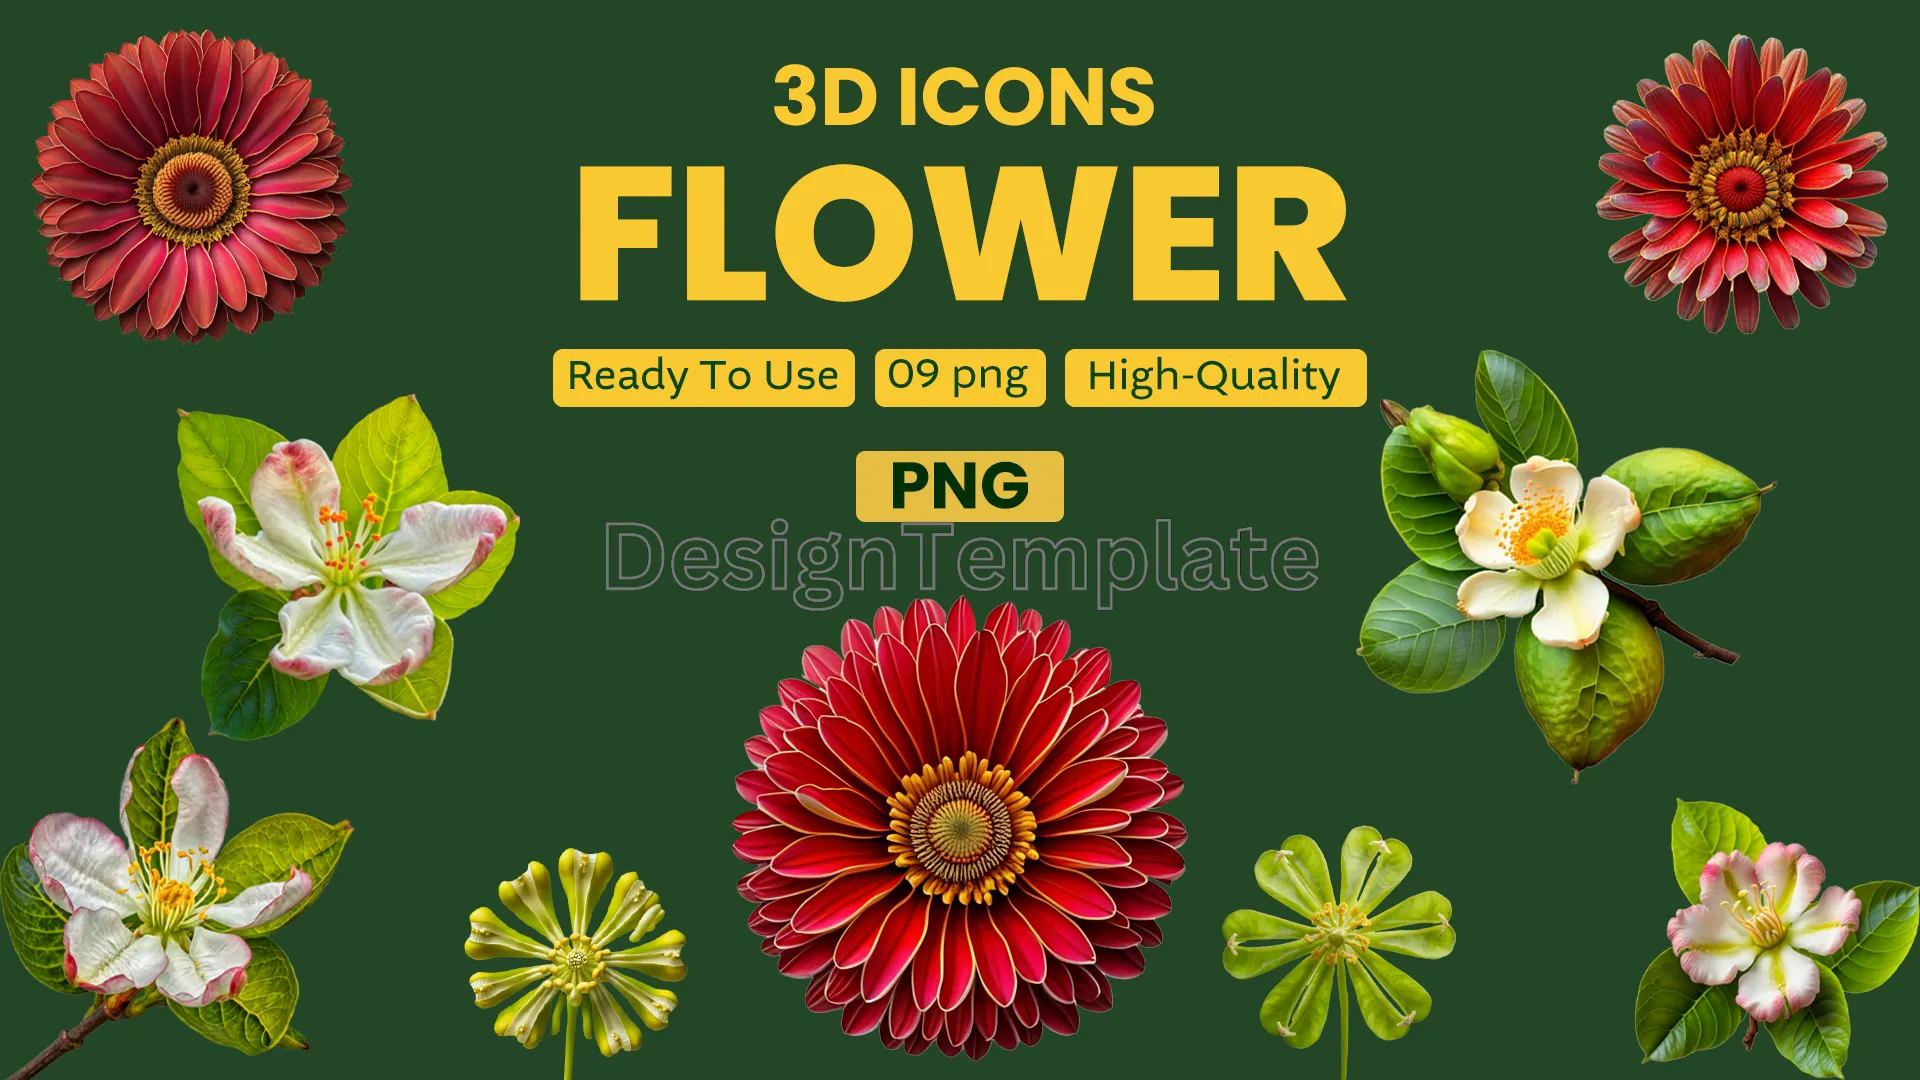 Colorful 3D Flower Elements Pack